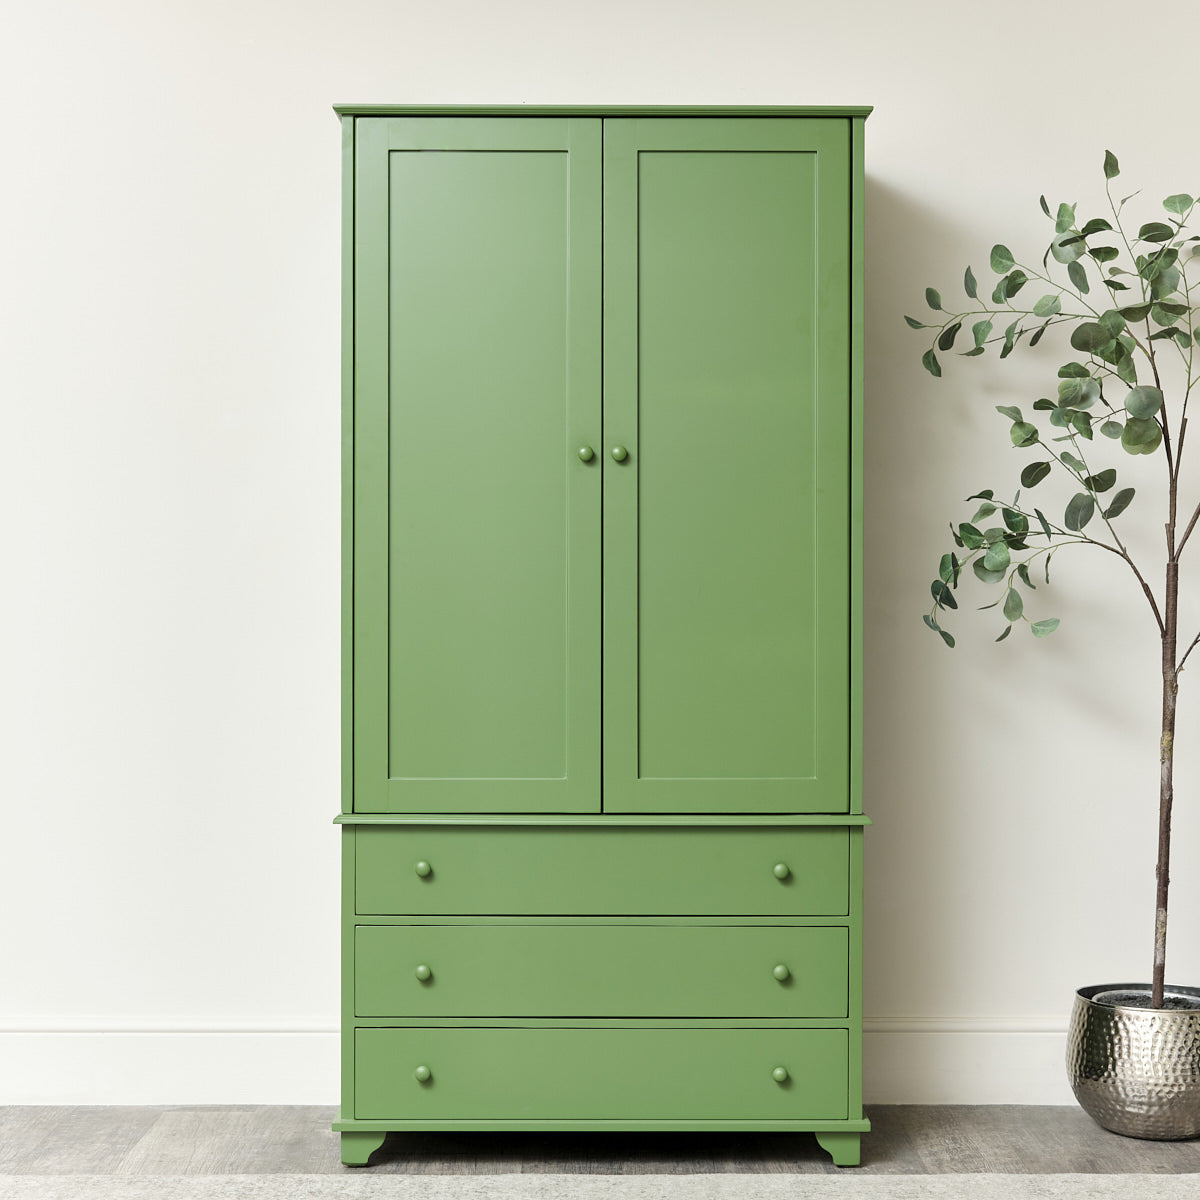 Large Olive Green Pantry/Storage Closet